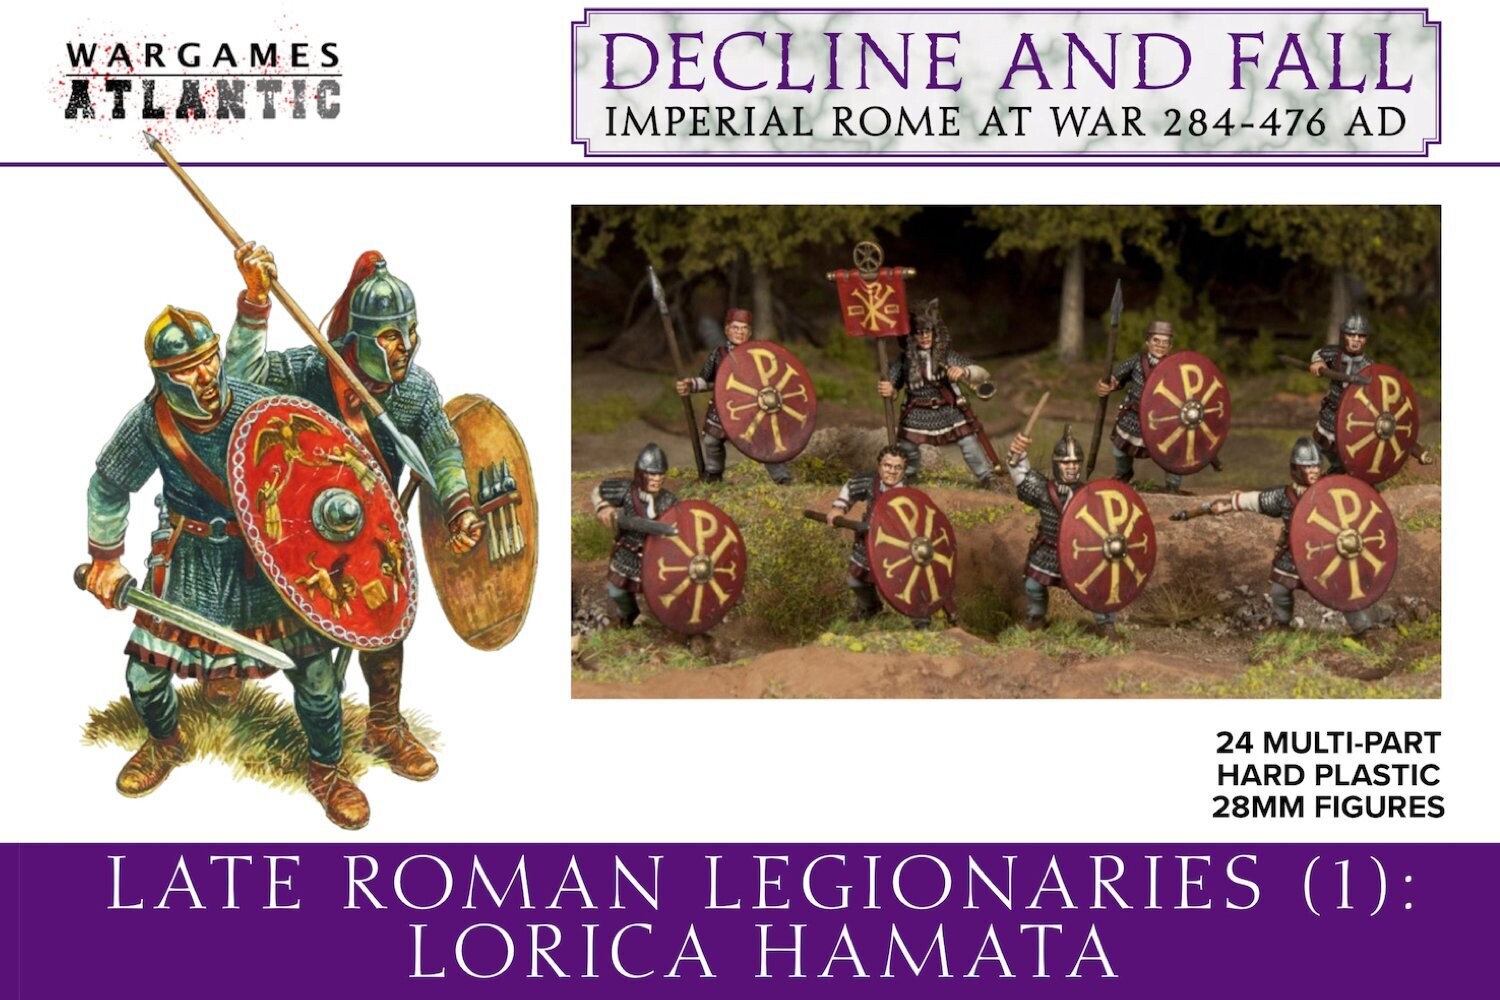 Decline and Fall: Late Roman Legionaries (1) - Lorica Hamata